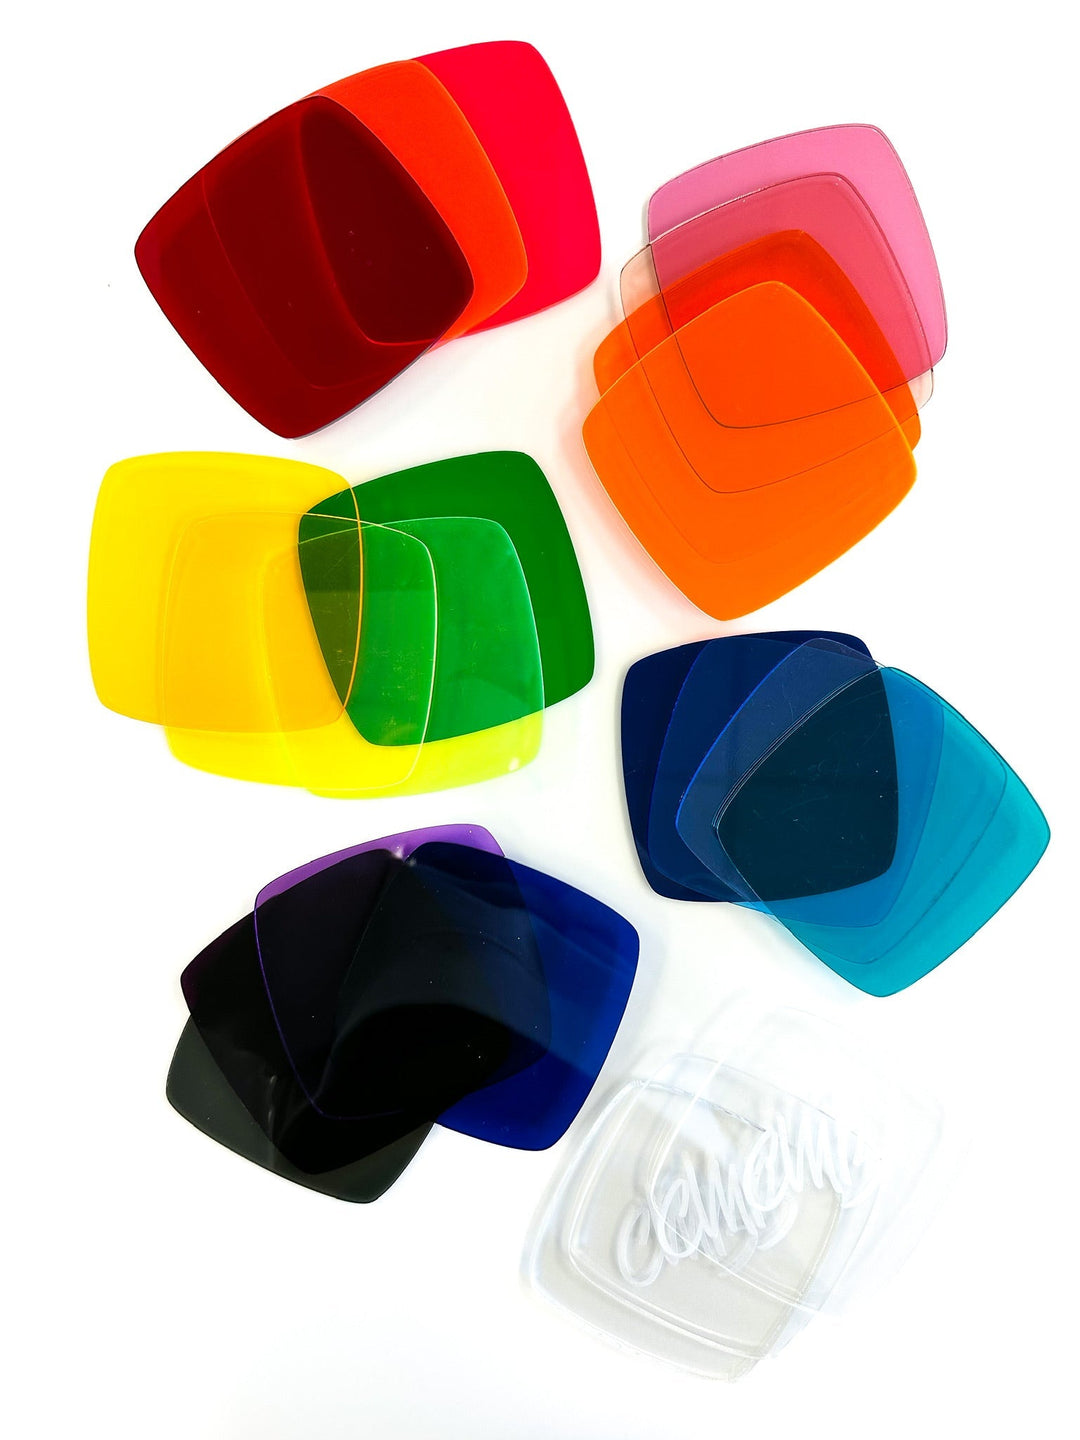 Transparent Acrylic Sheets - CMB Transparent Acrylic Sheets - Local Plastics Supplier & Wholesale Acrylic Sheets Distributor